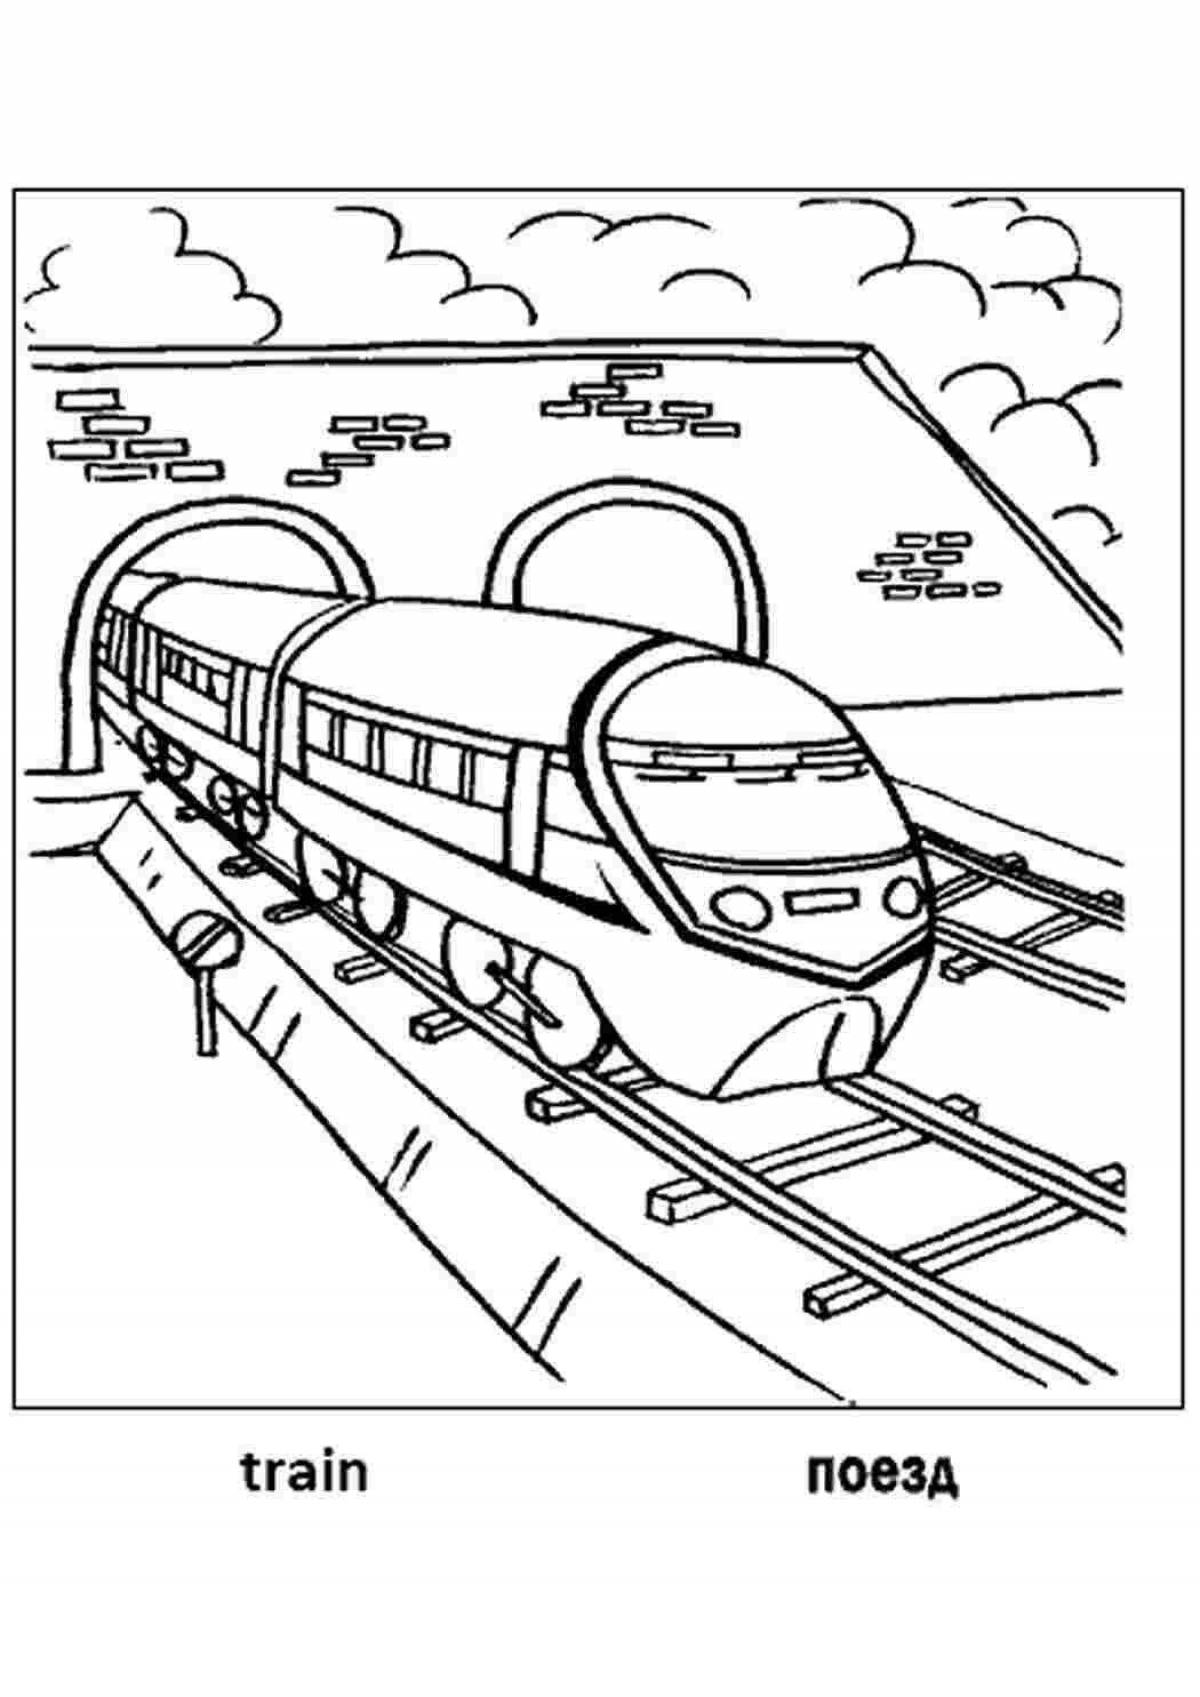 Magic rail transport coloring book for kids